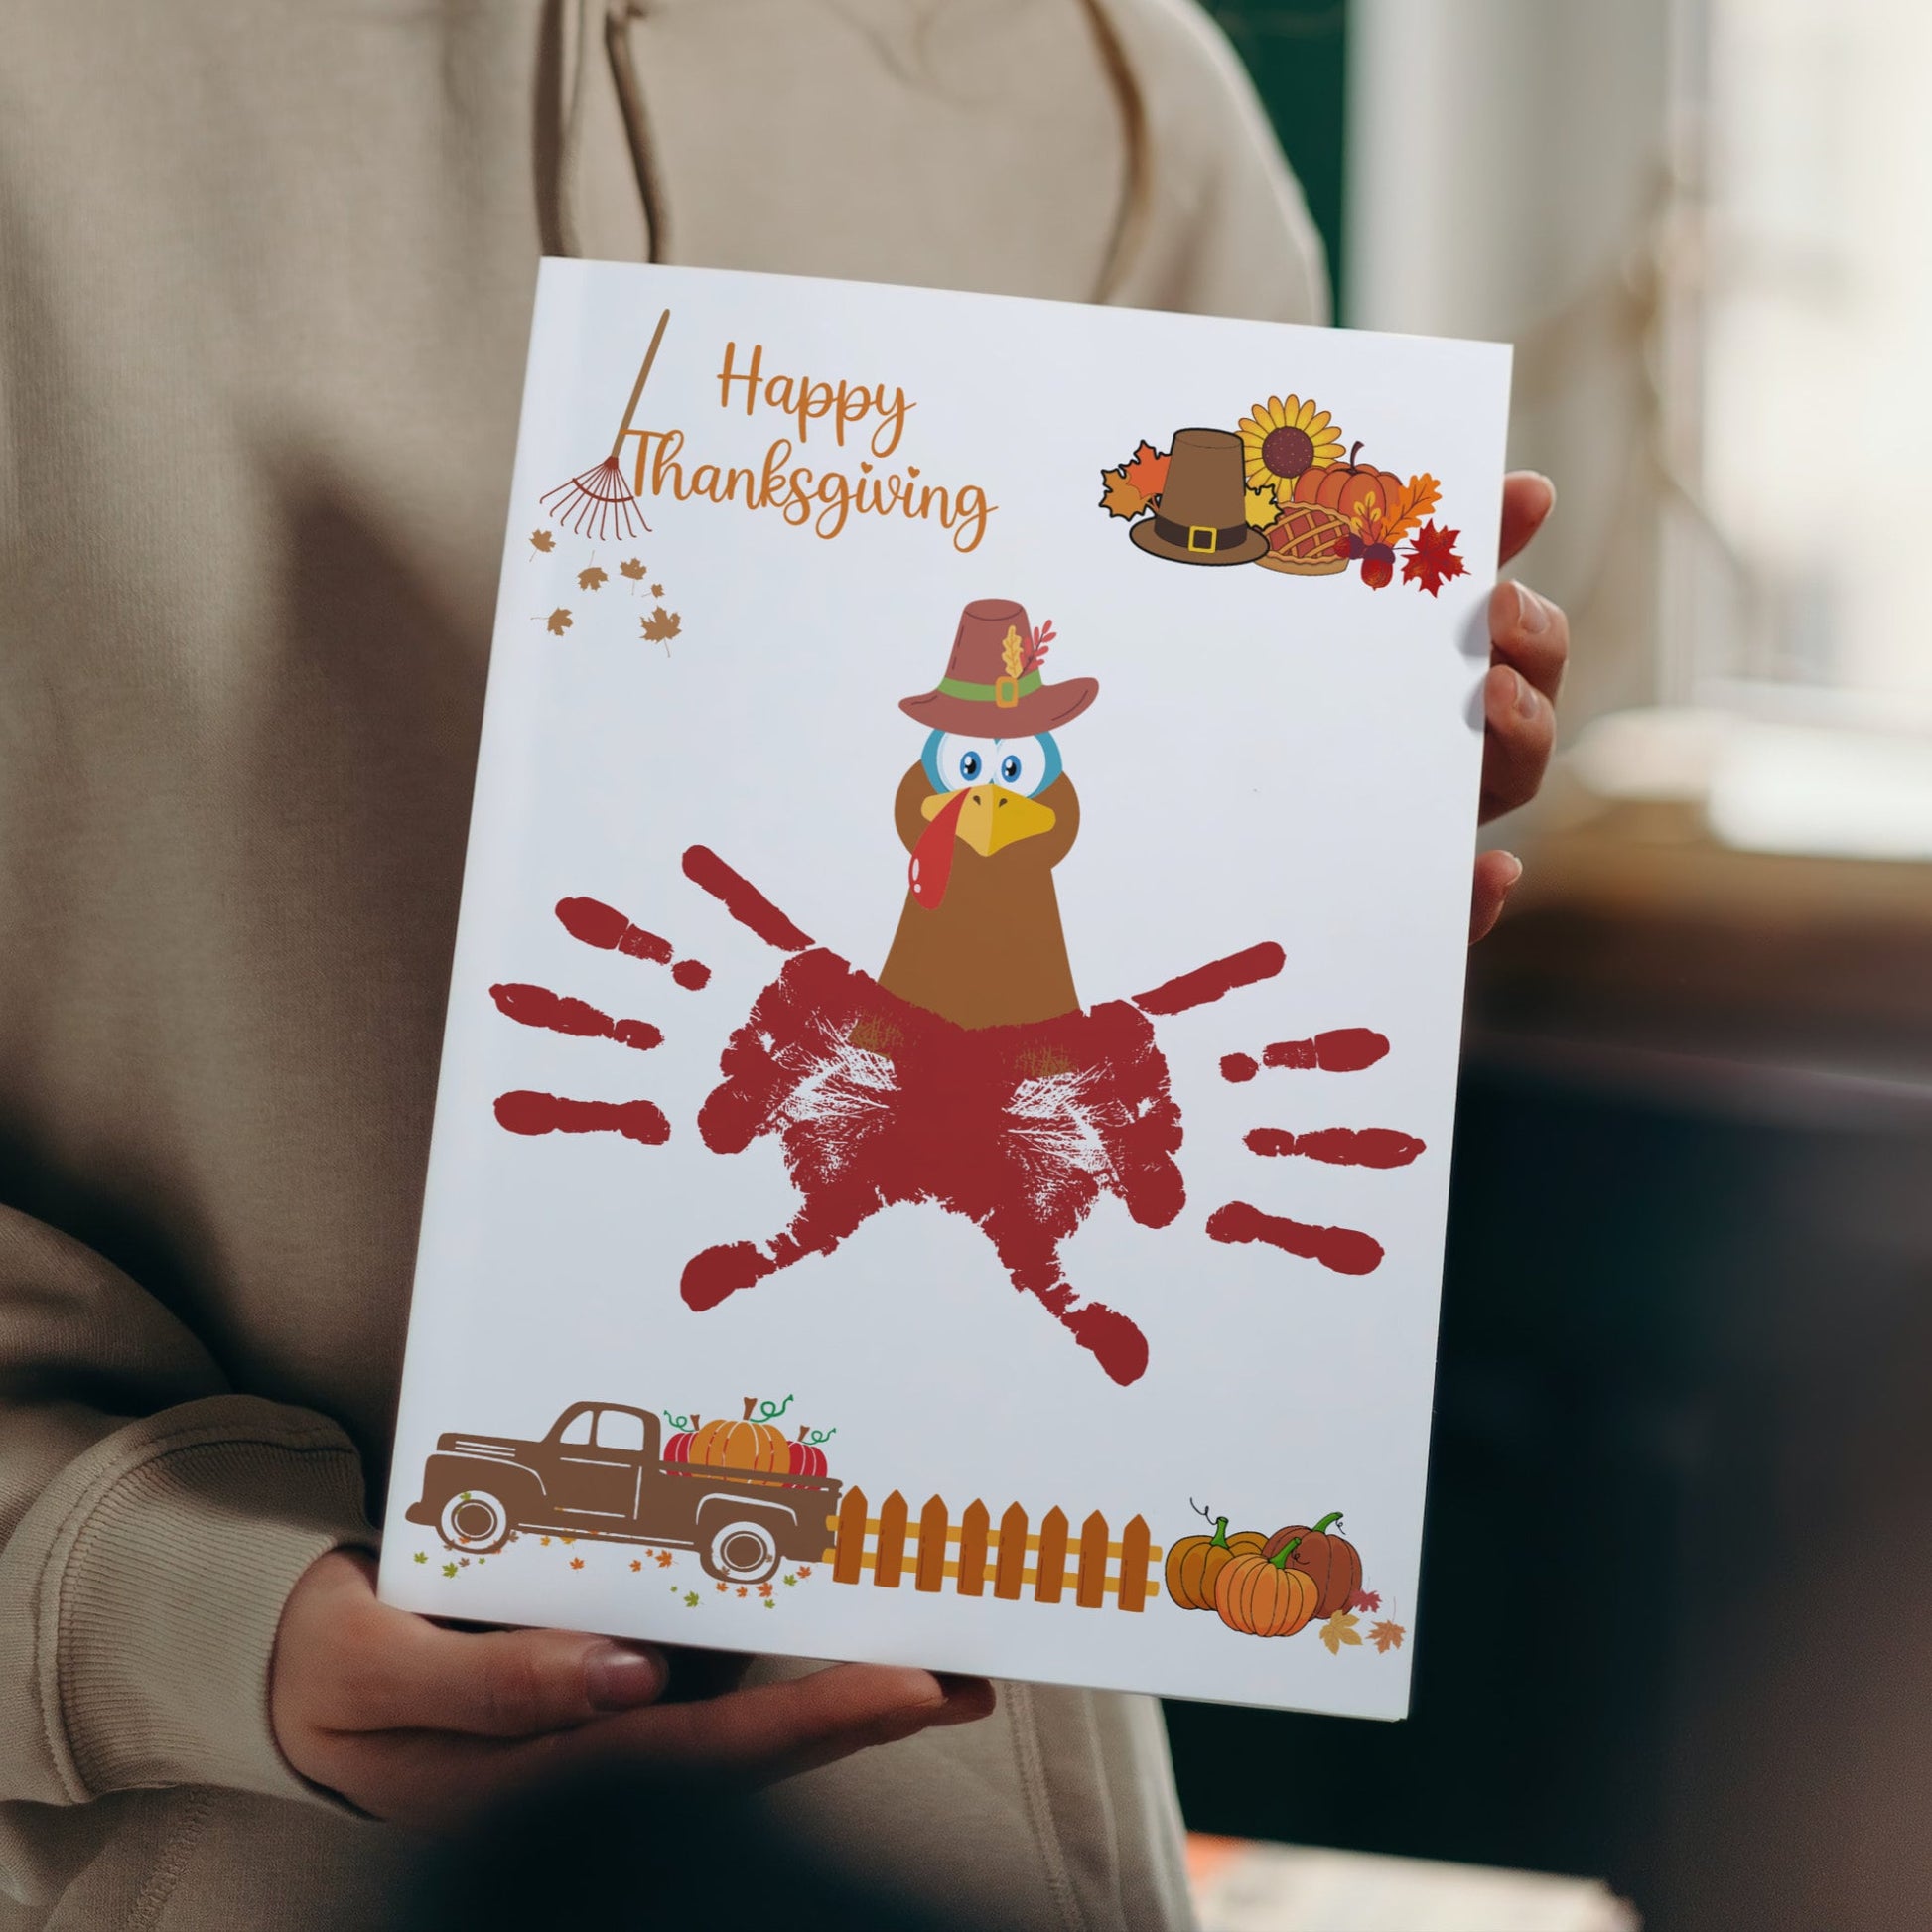 Fall Handprint & Footprint Printable Crafts, DIY Autumn Art For Baby Toddler Kids Thanksgiving Halloween Memory Keepsake, Preschool Activity